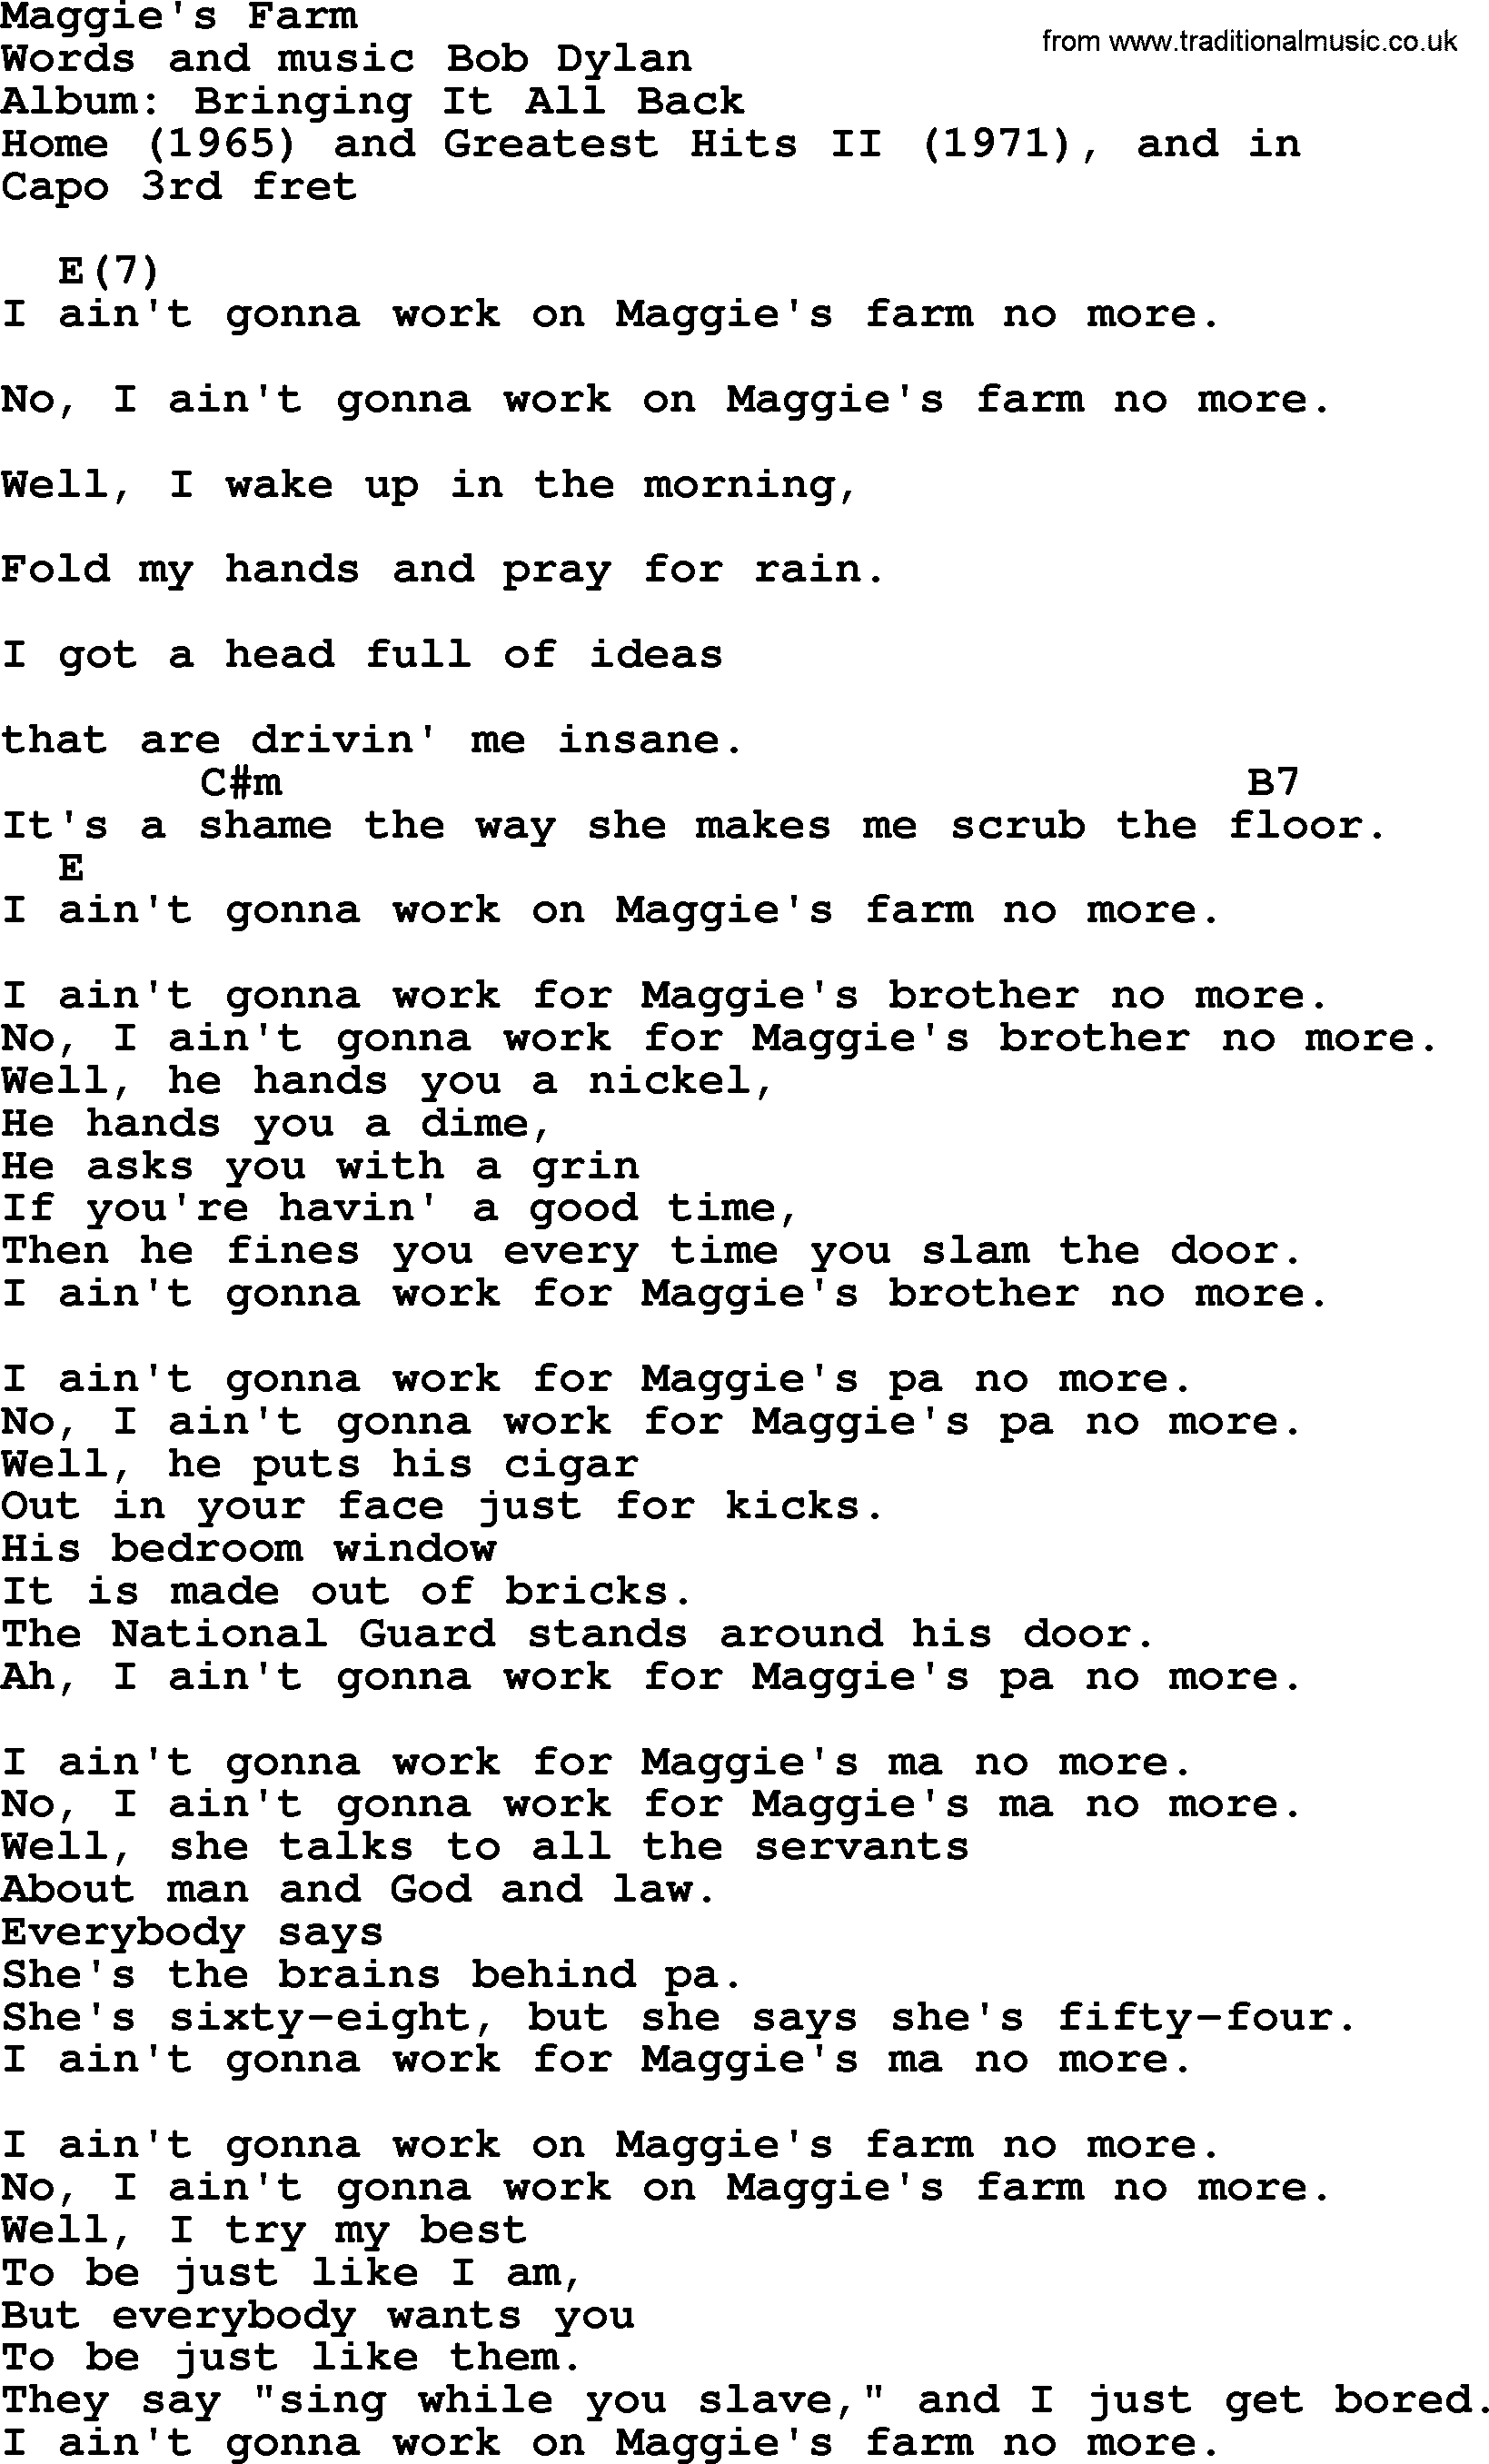 Bob Dylan song, lyrics with chords - Maggie's Farm